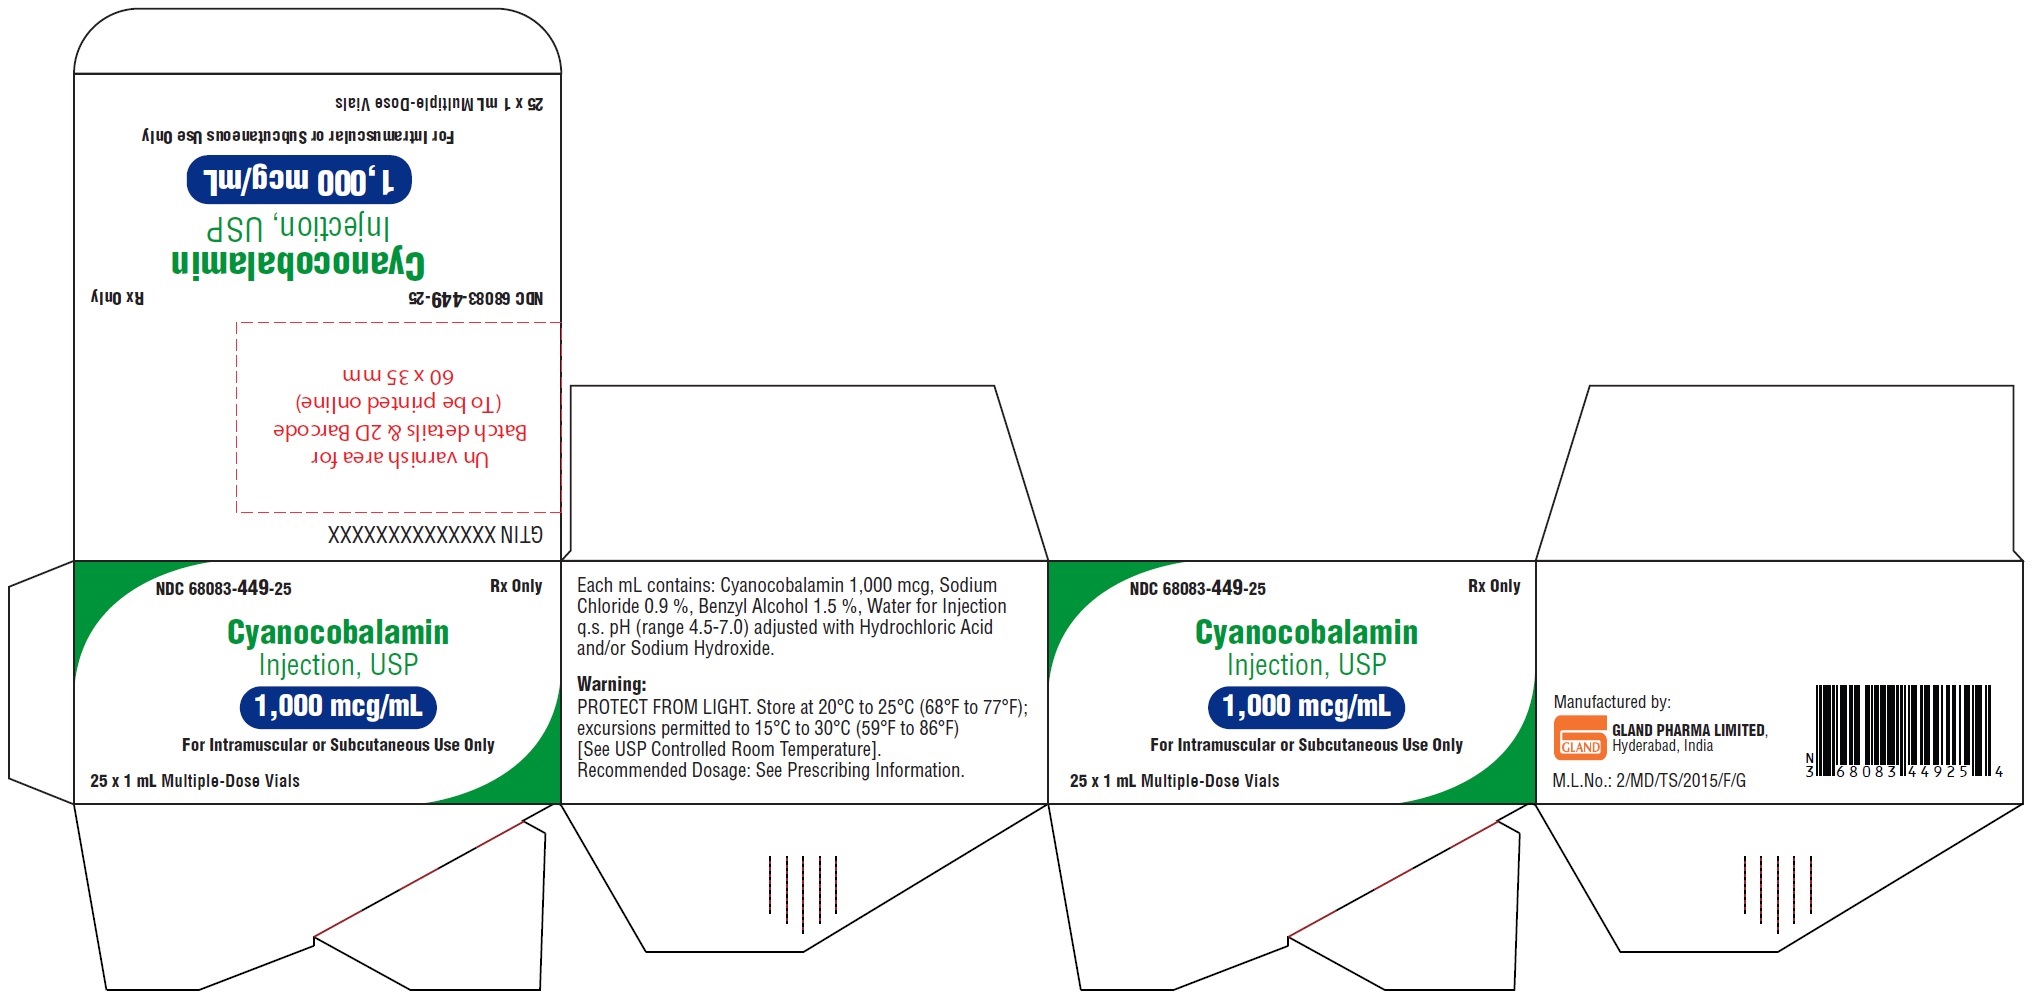 cyanocobalamin-spl-carton-label-1-ml